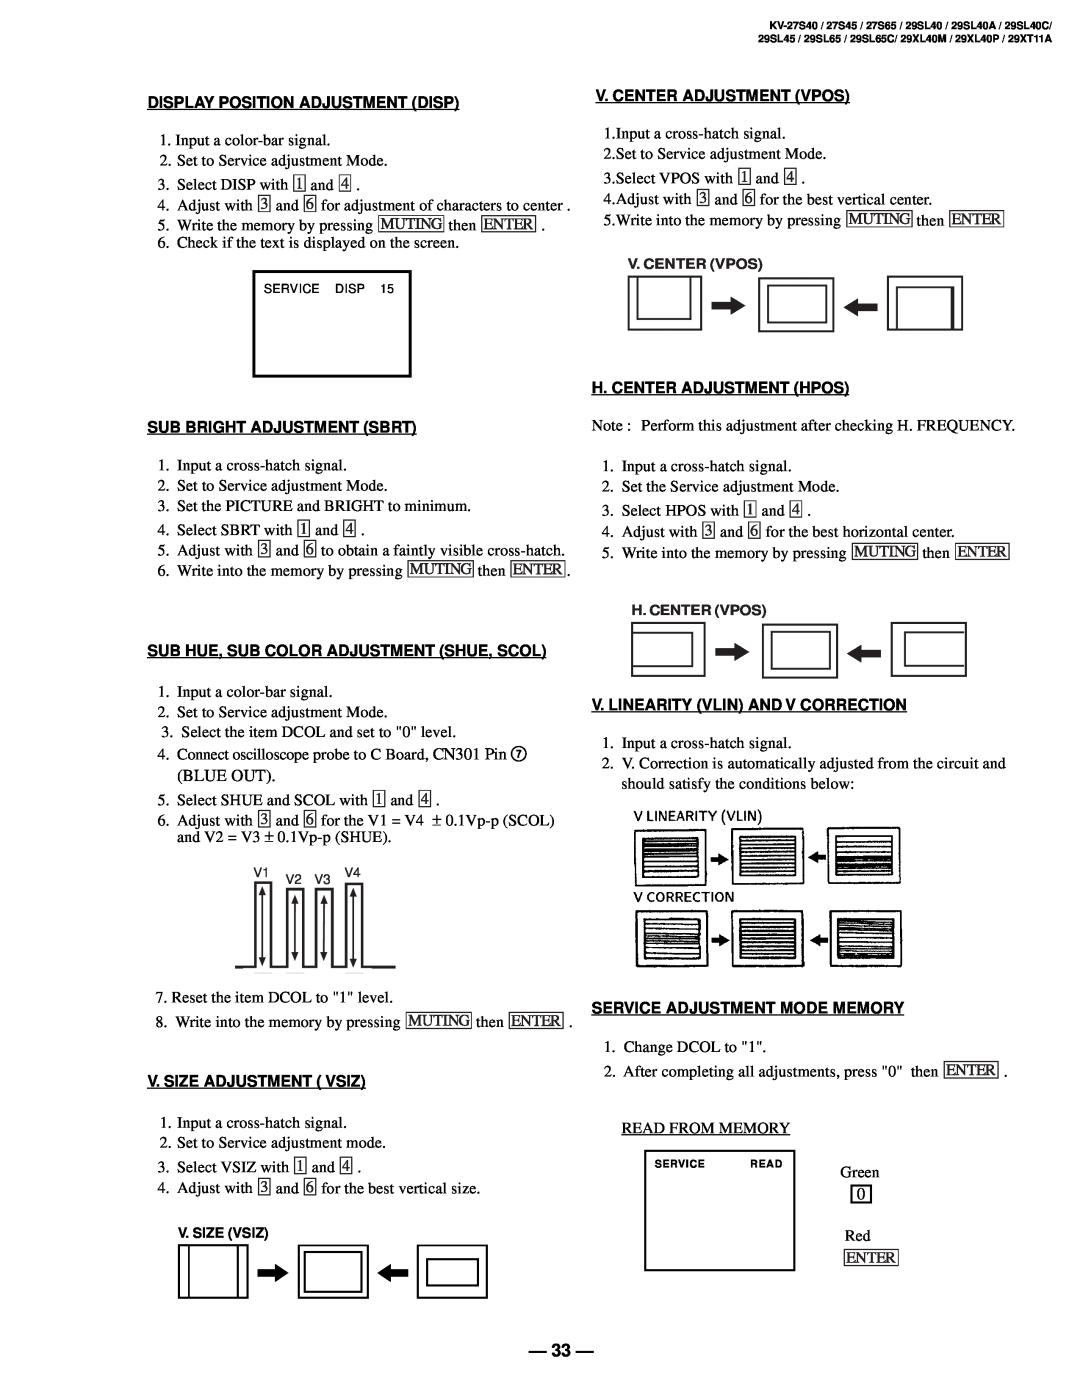 Sony KV-27S45 Display Position Adjustment Disp, Sub Bright Adjustment Sbrt, Sub Hue, Sub Color Adjustment Shue, Scol 